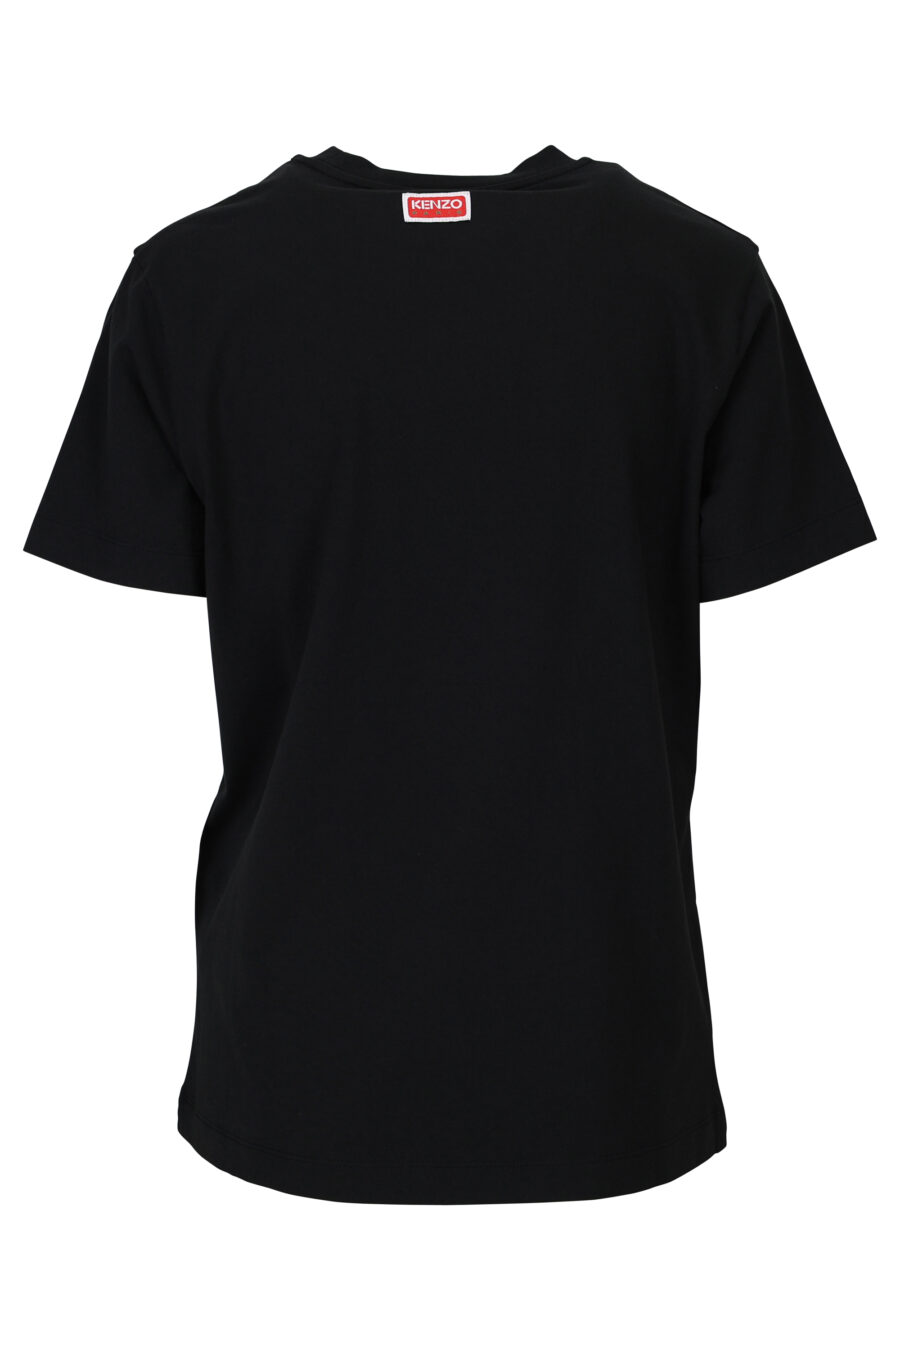 T-shirt noir avec logo jaune "kenzo target" - 3612230510654 1